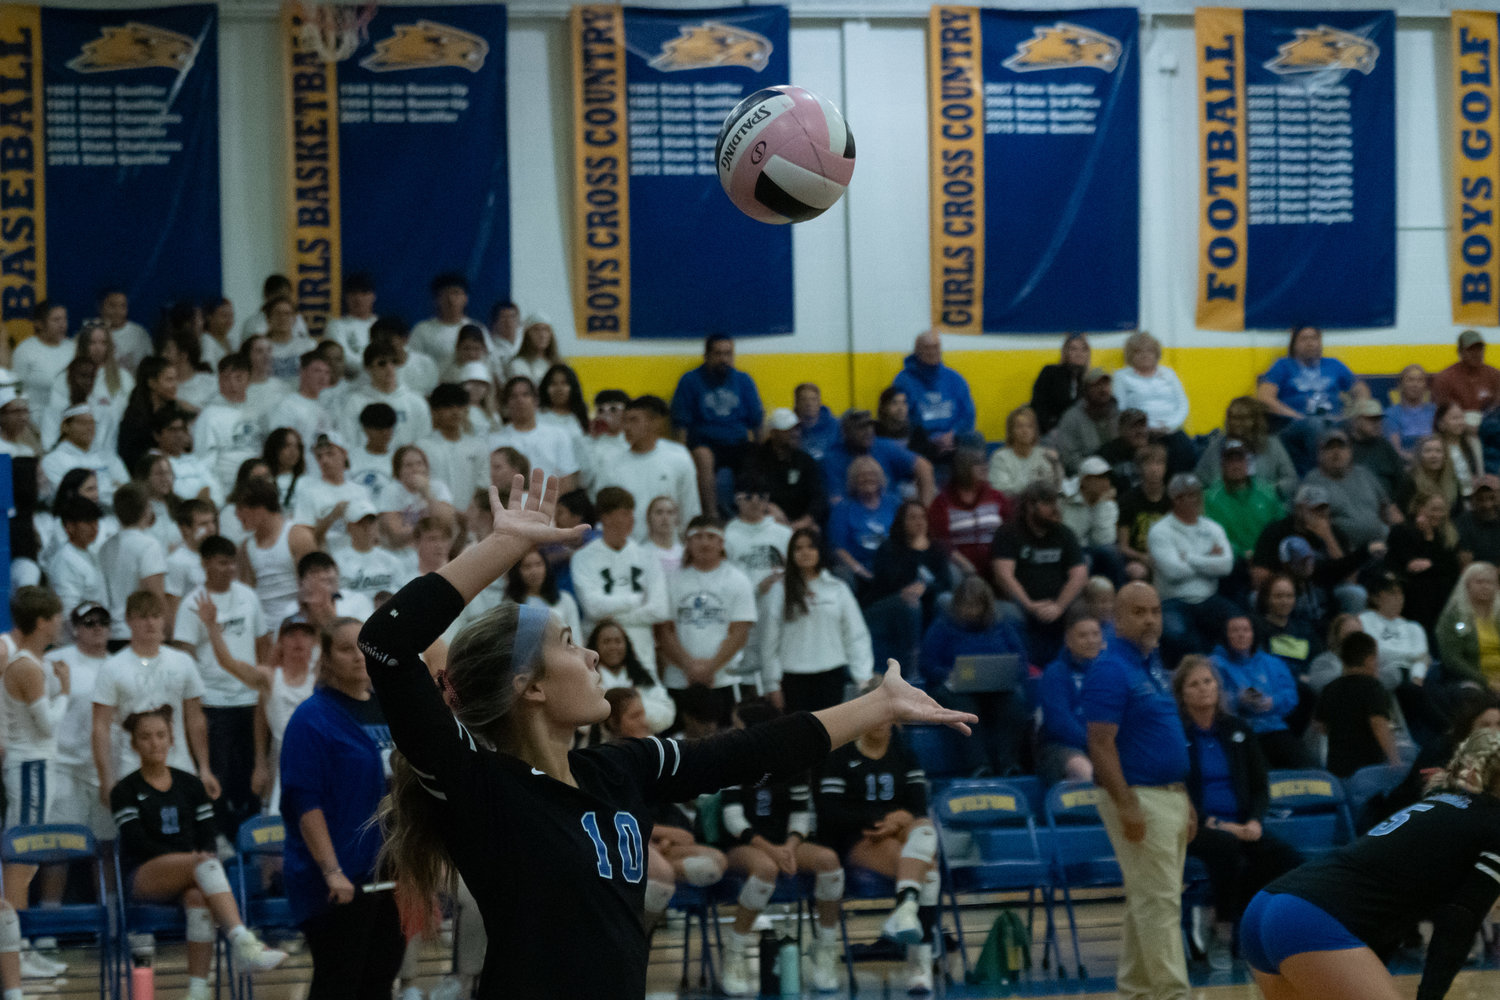 Brooklyn Buysse serves the volleyball against Wilton last week.